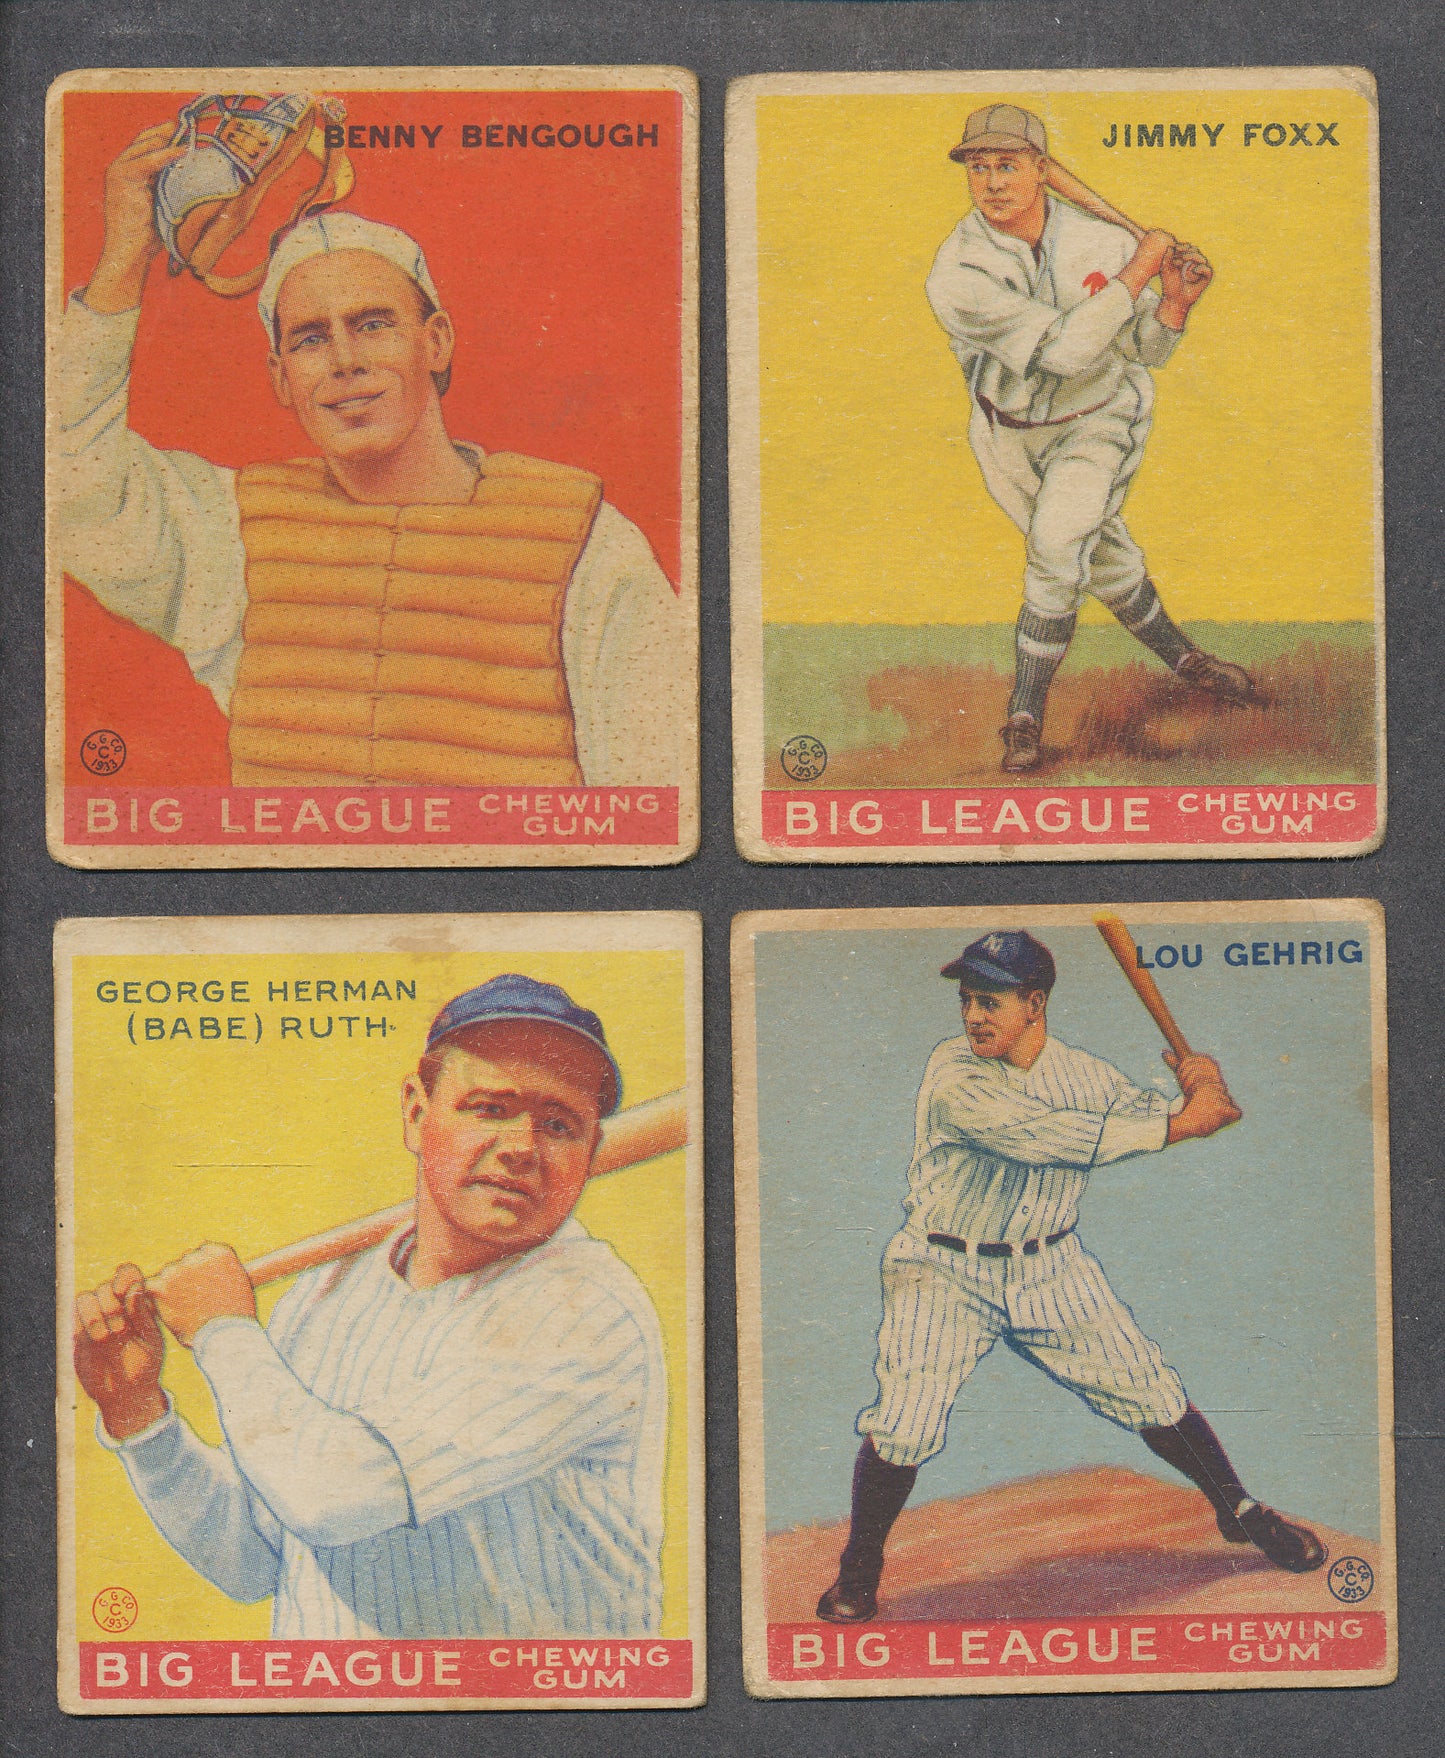 1933 Goudey Baseball Near Set PR VG